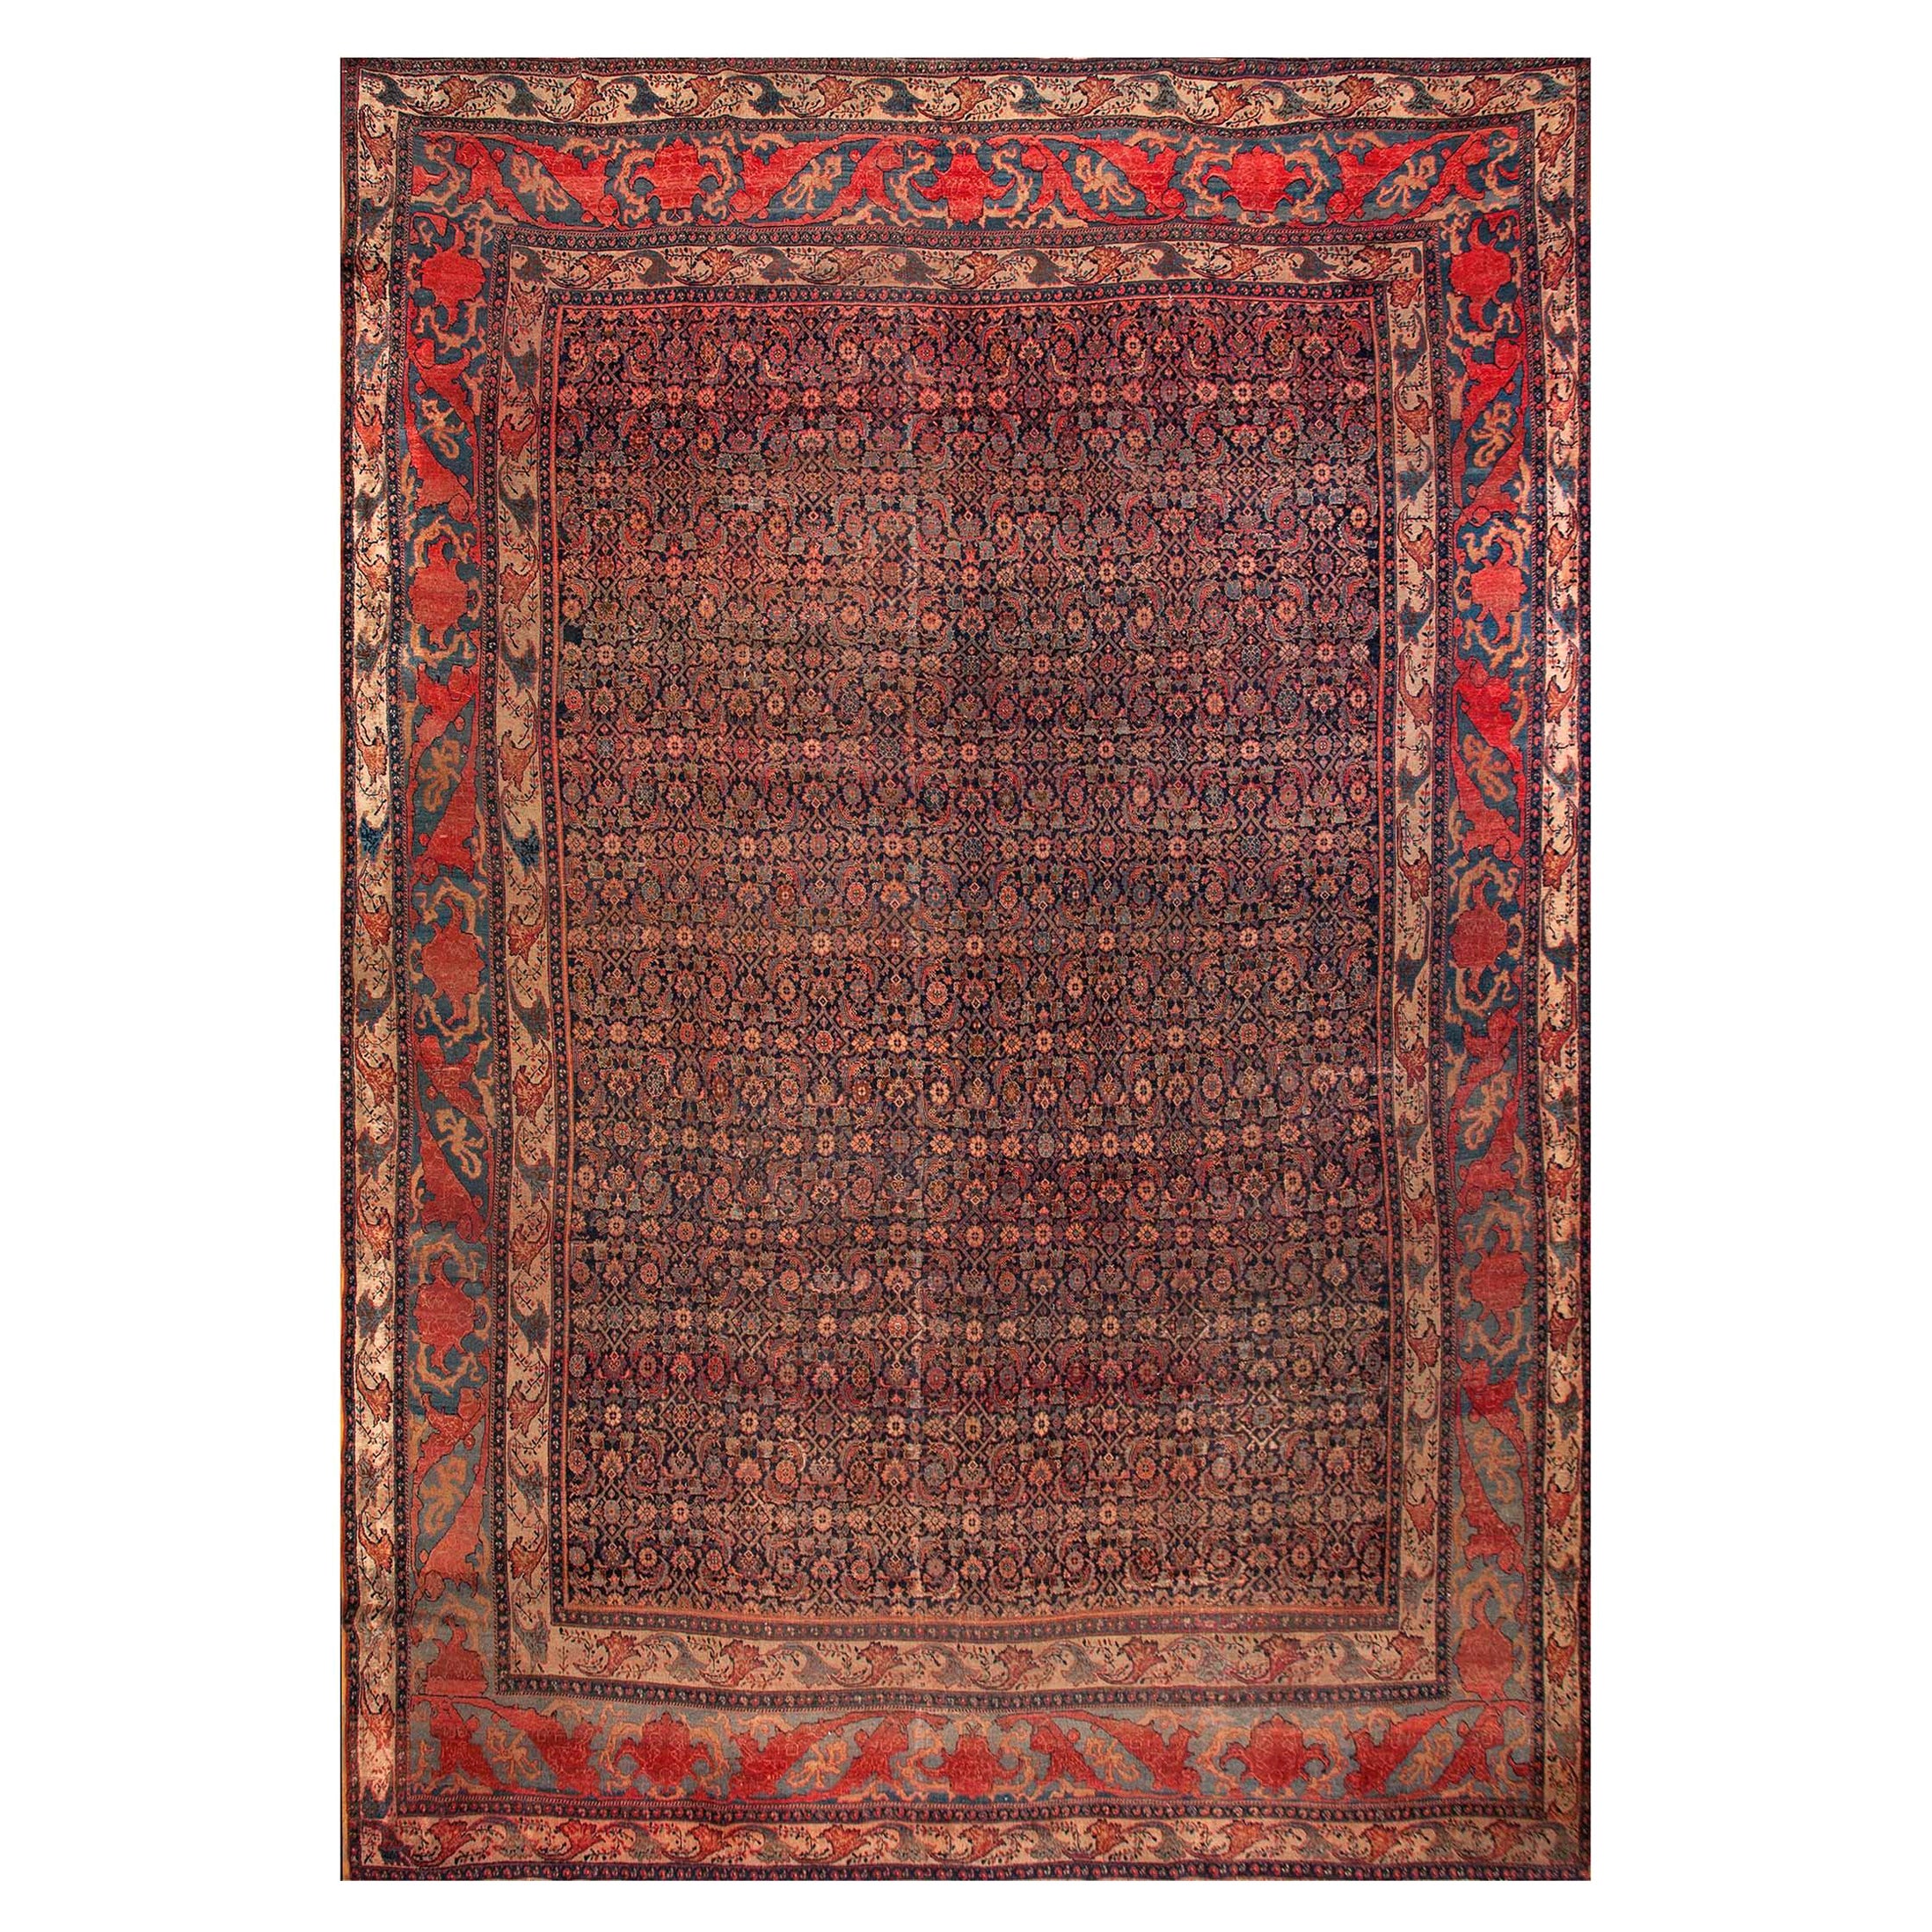 Late 19th Century Persian Bijar Carpet ( 12' 0'' x 18' 6'' - 365 x 563 cm )